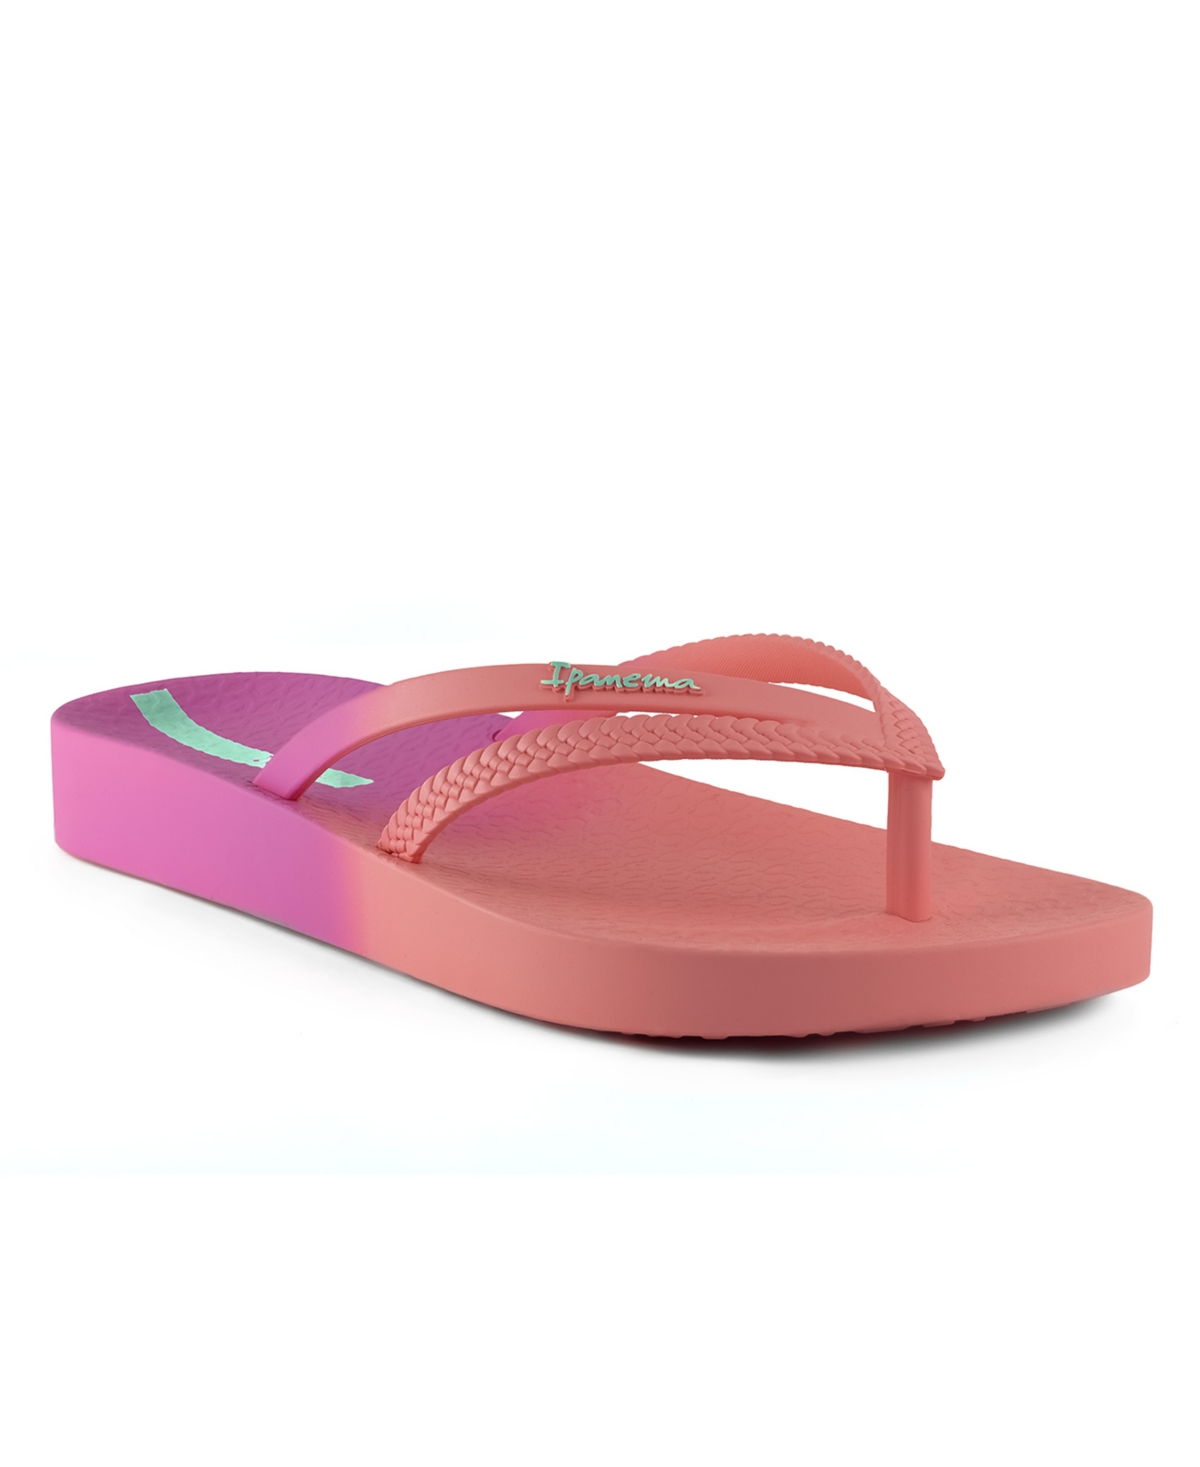 Ipanema Women's Bossa Soft Chic Flip-flop Sandals Women's Shoes In Pink/pink